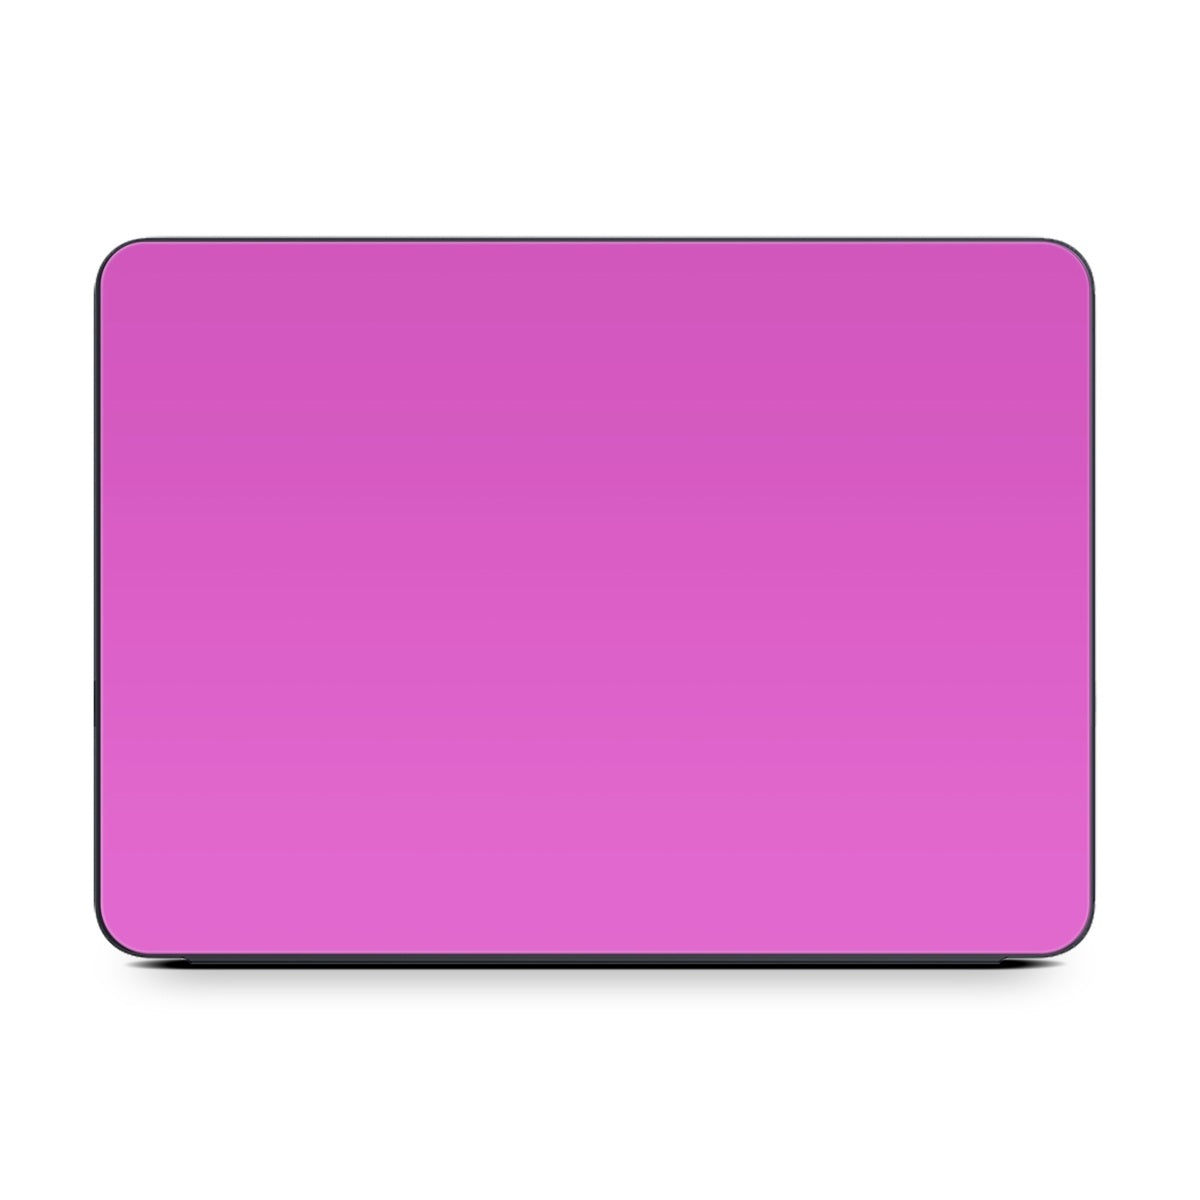 Solid State Vibrant Pink - Apple Smart Keyboard Folio Skin